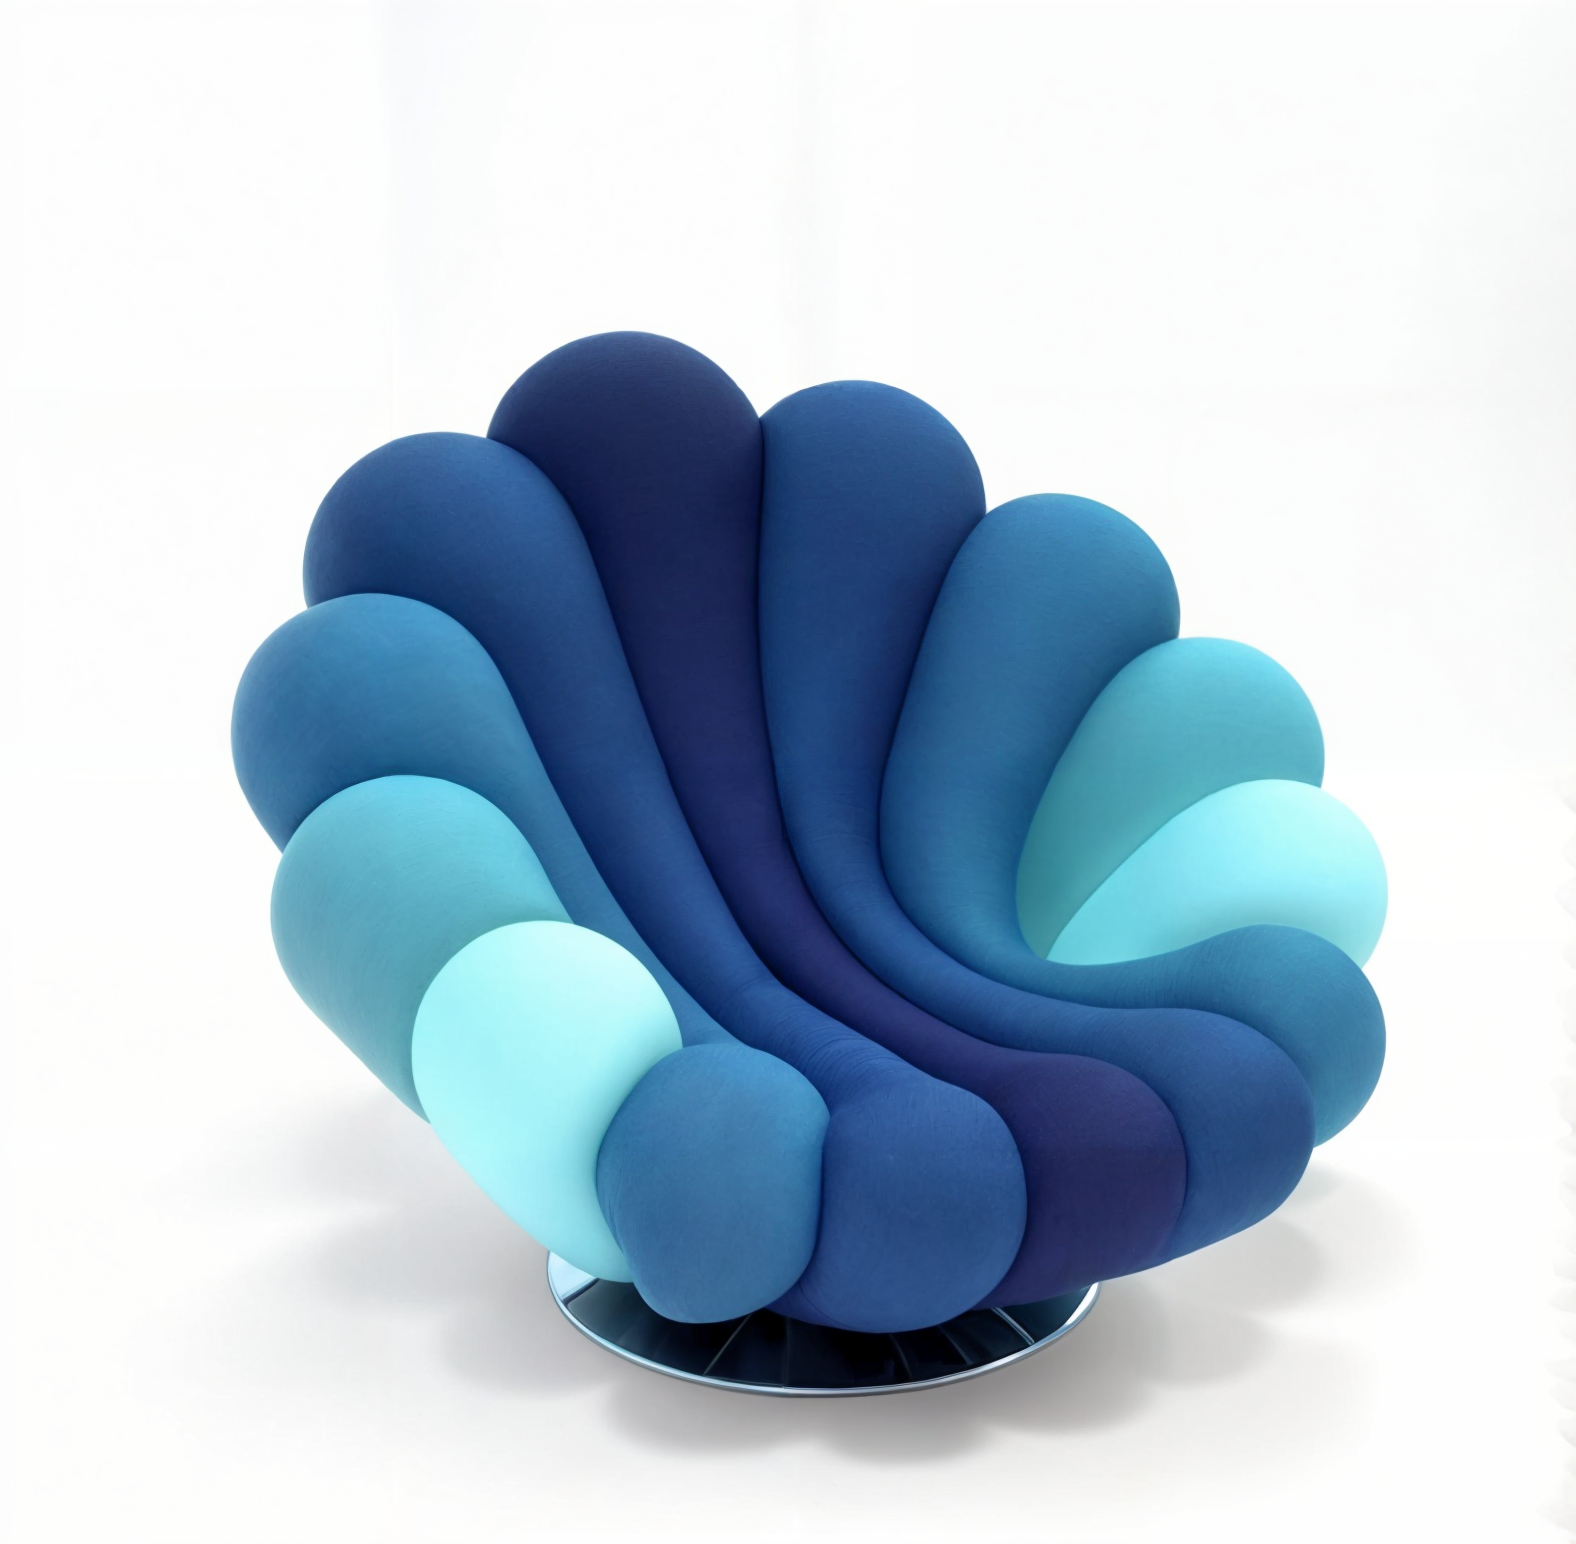 The Multicolor Swivel Chair